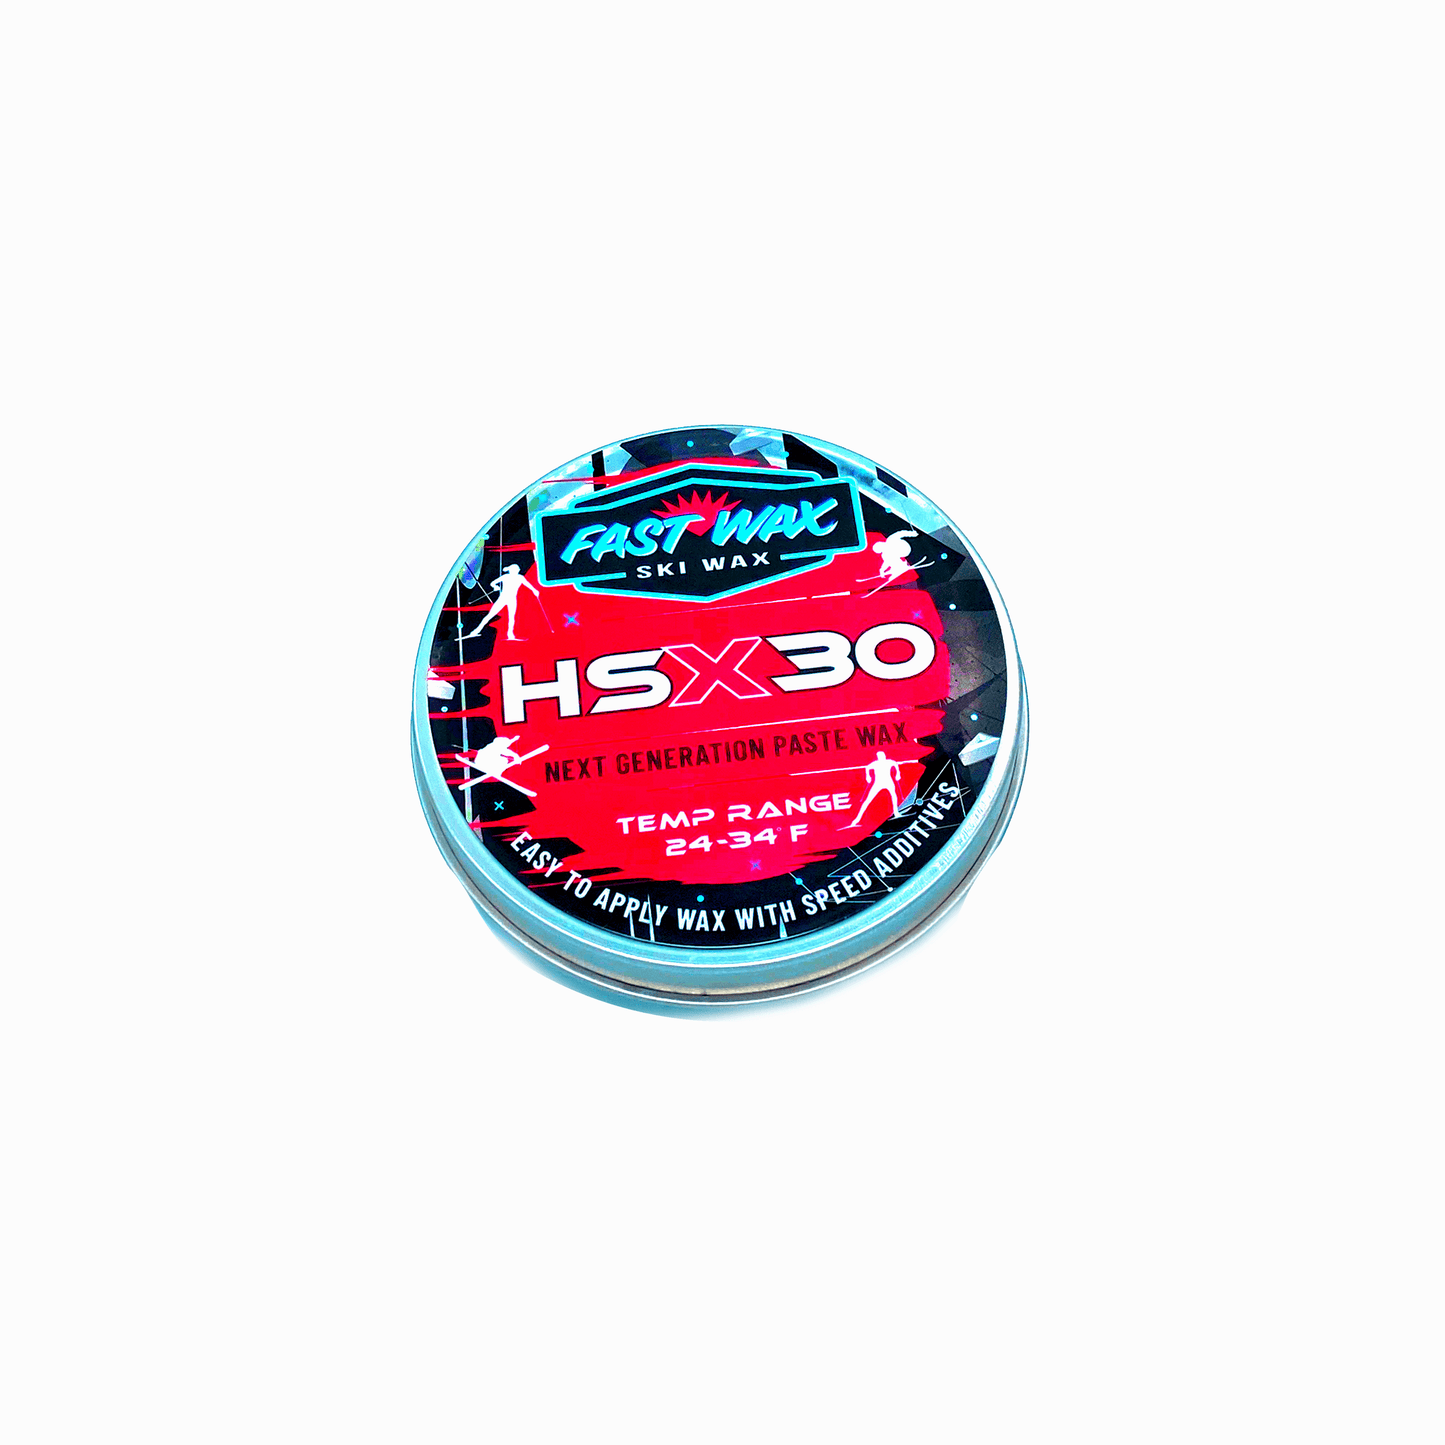 HSX 30 - Paste Wax (Red)